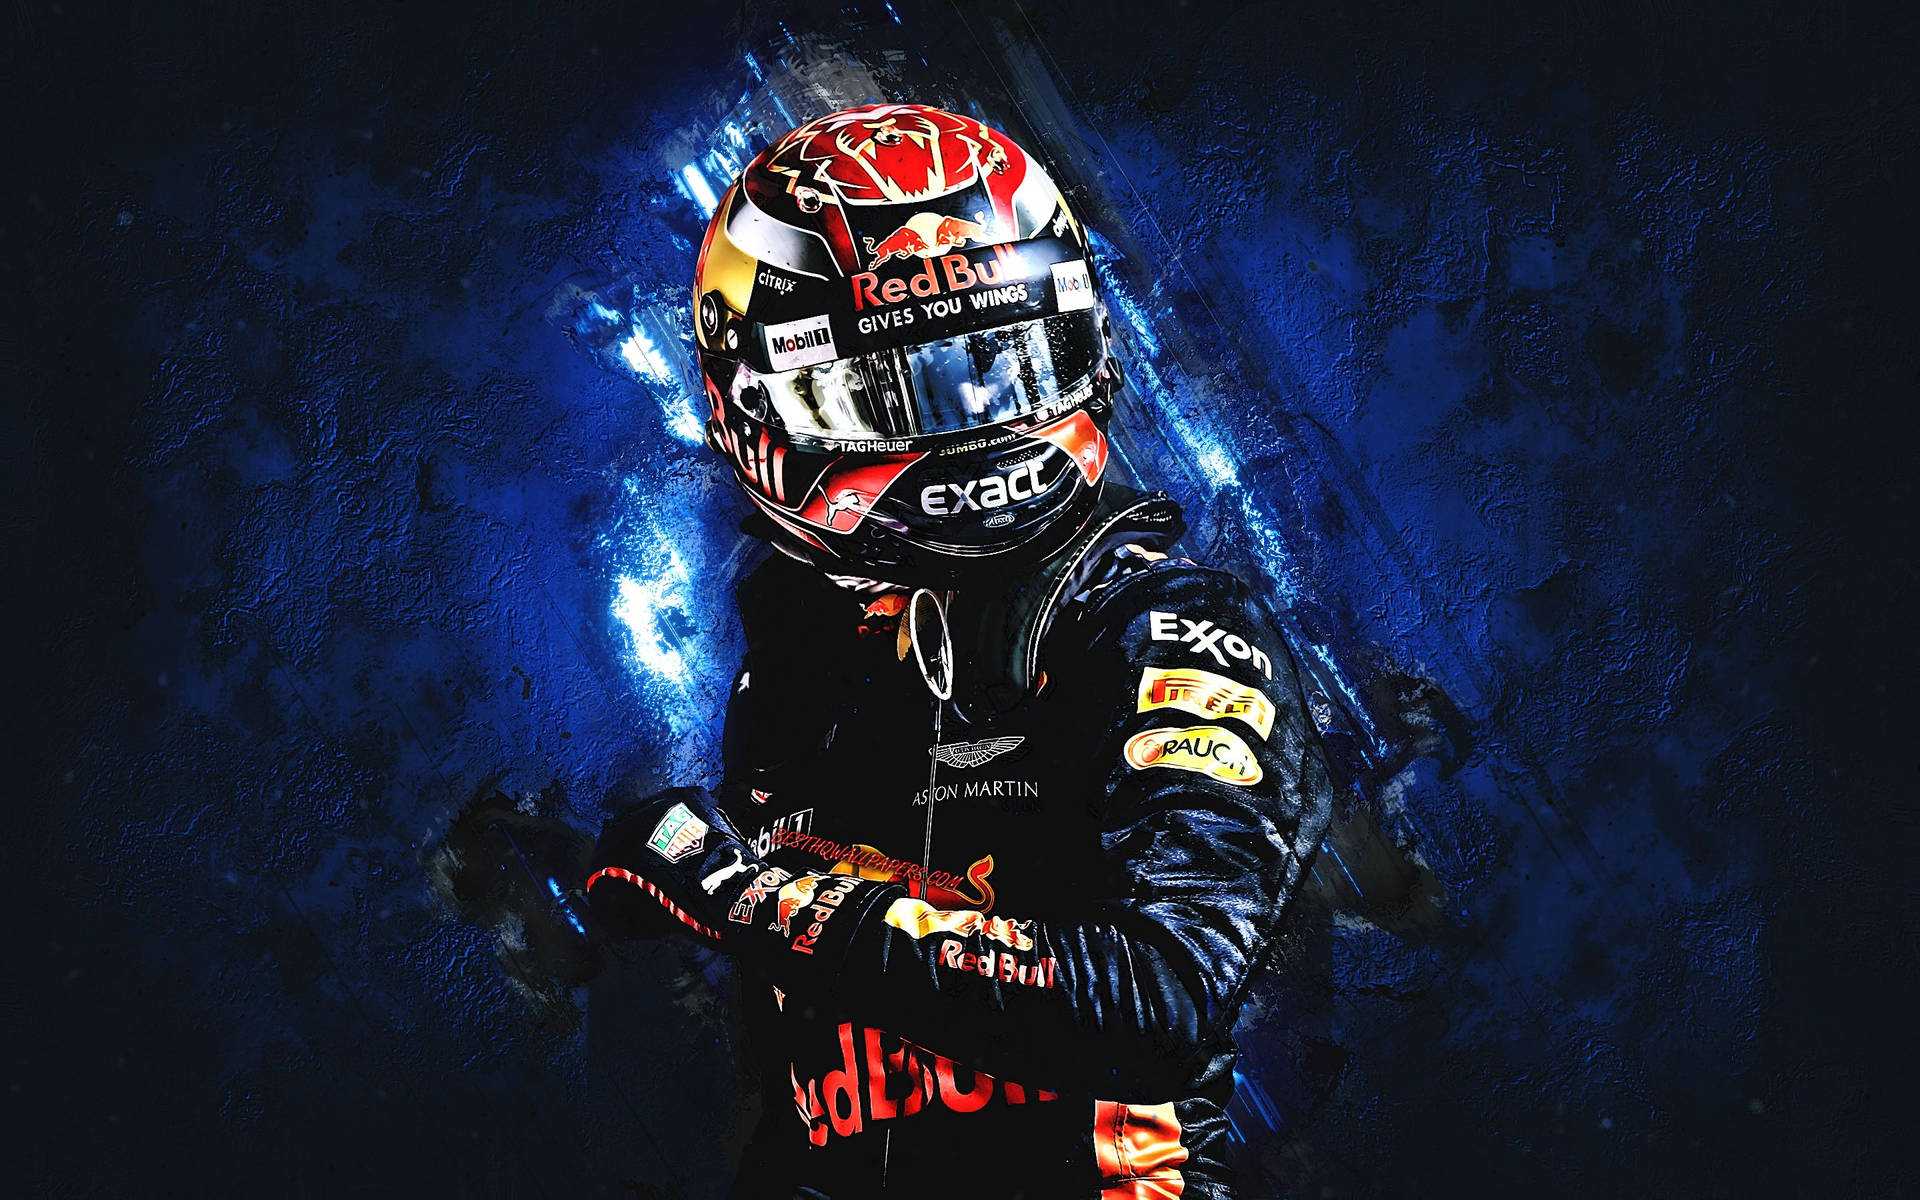 Max Verstappen Formula 1 Racer Wallpaper